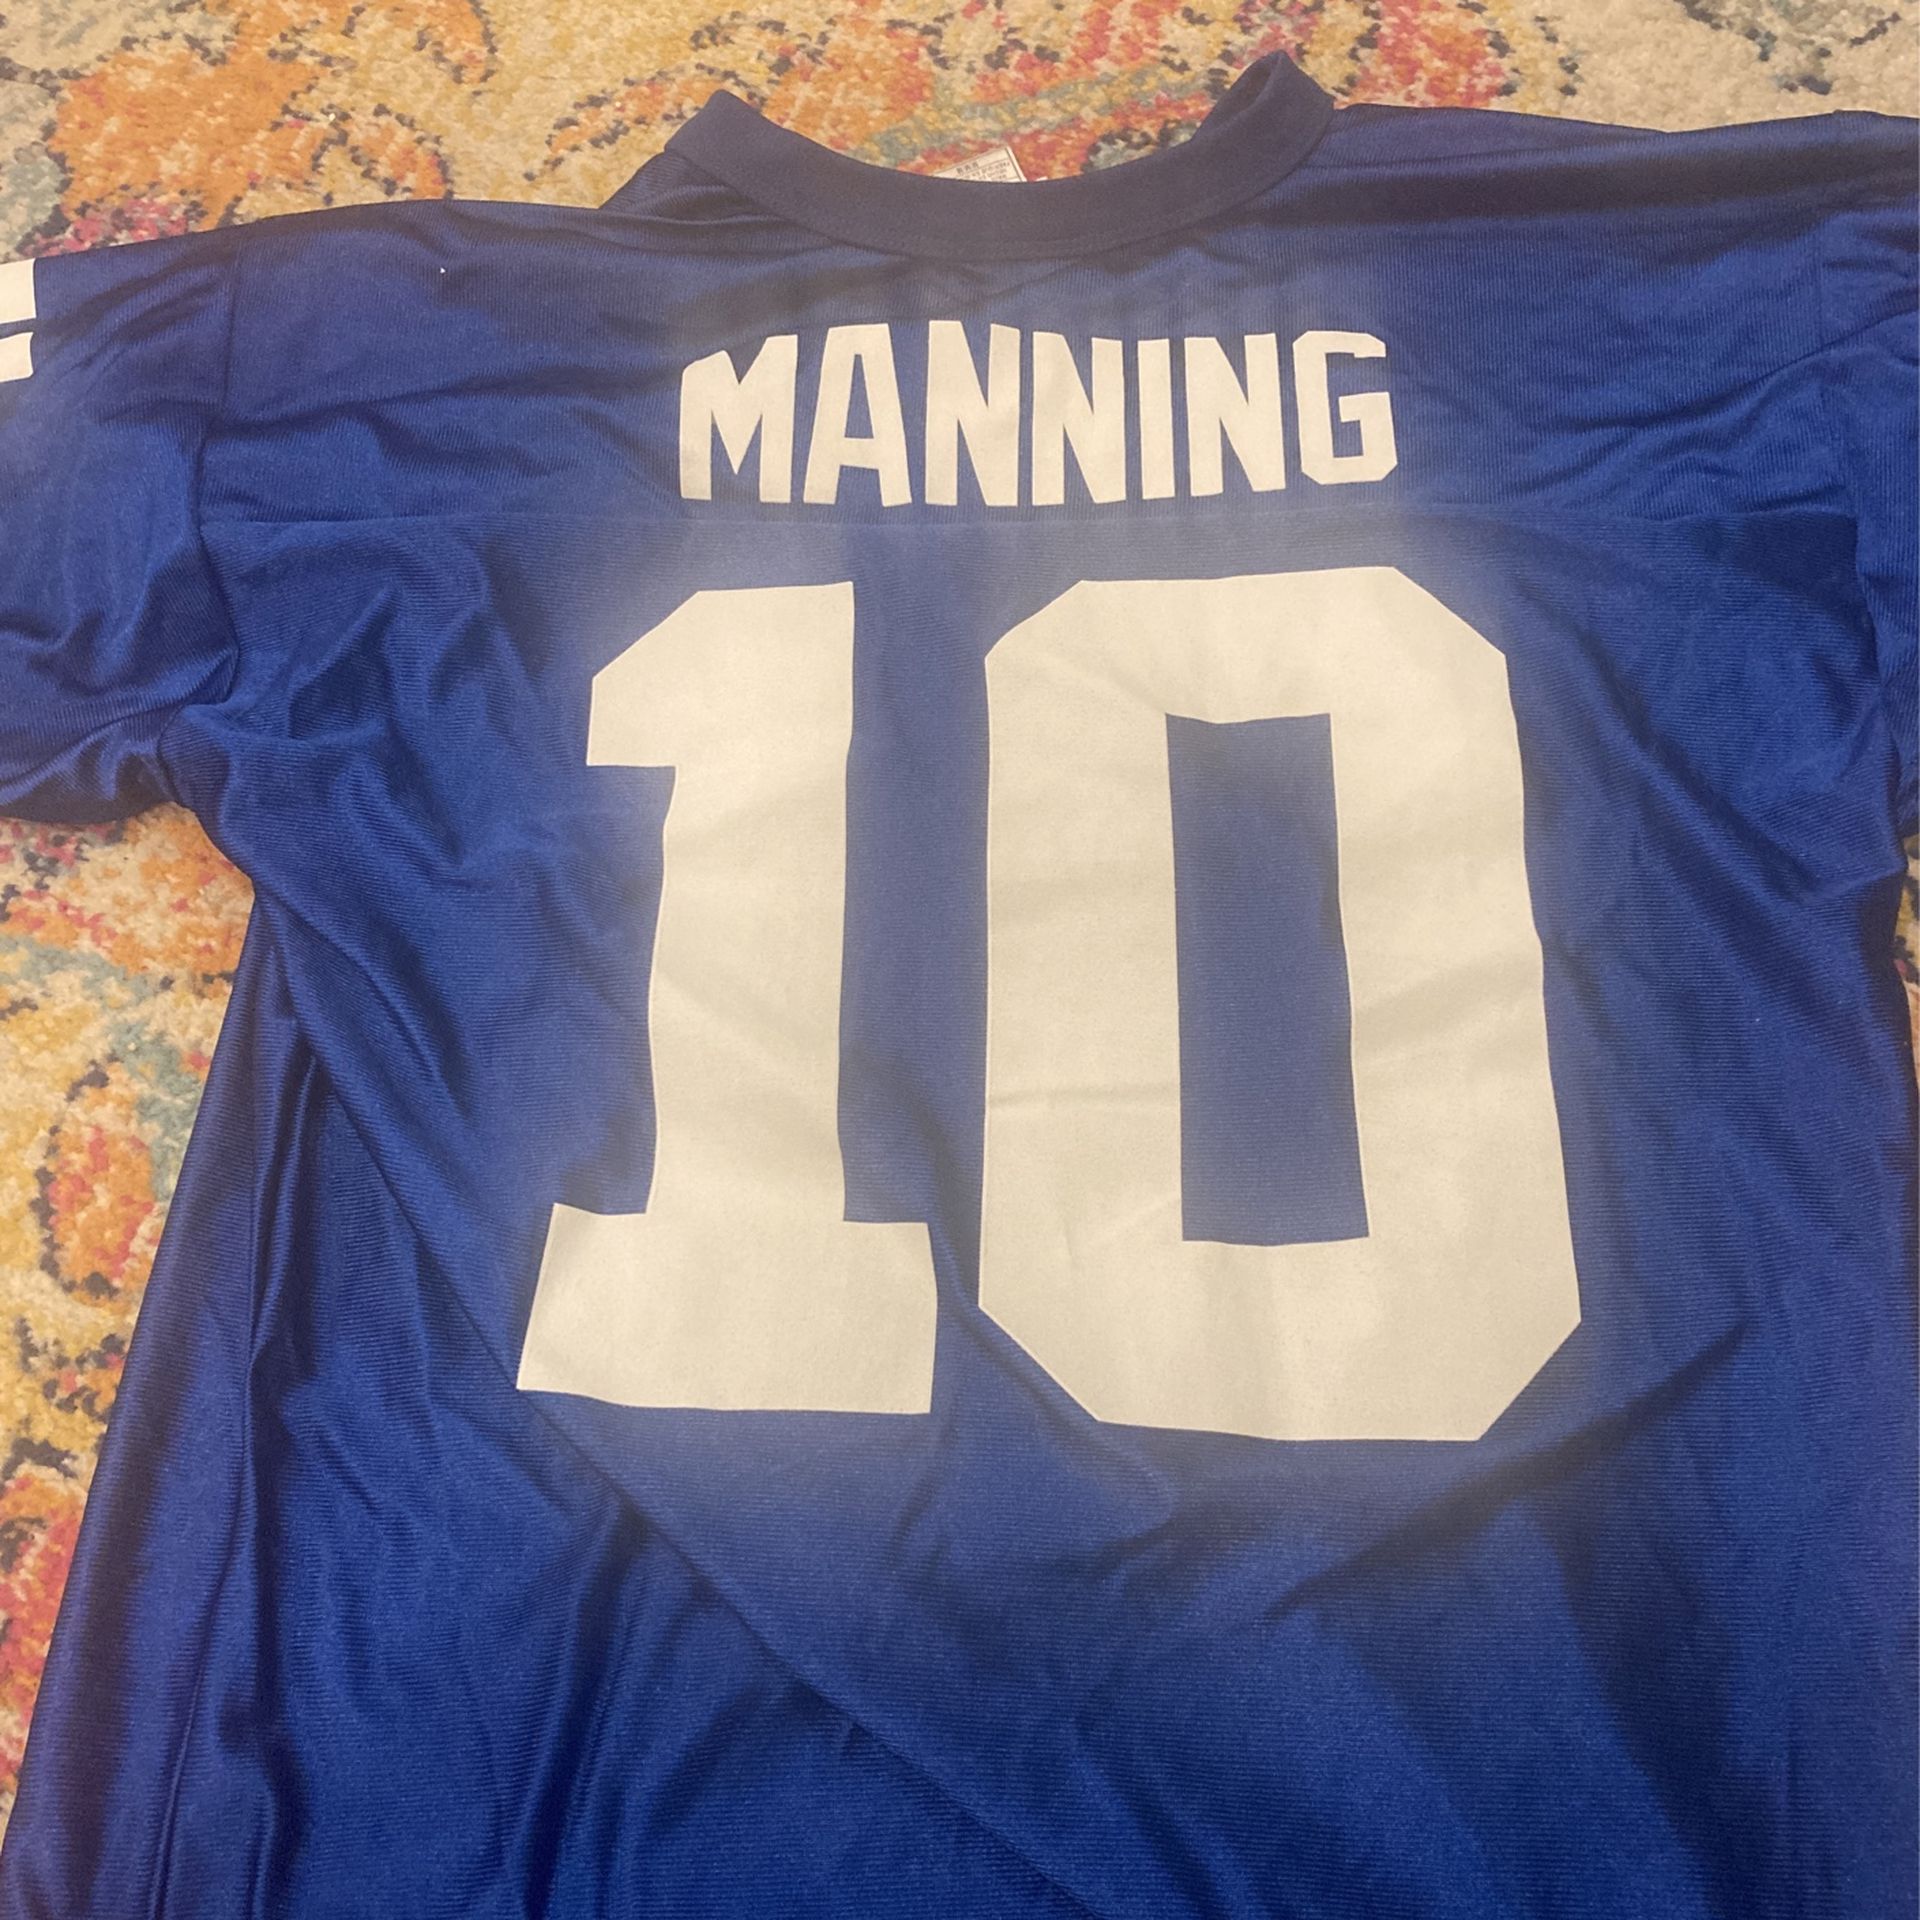 Payton Manning Jersey - Size Mediom